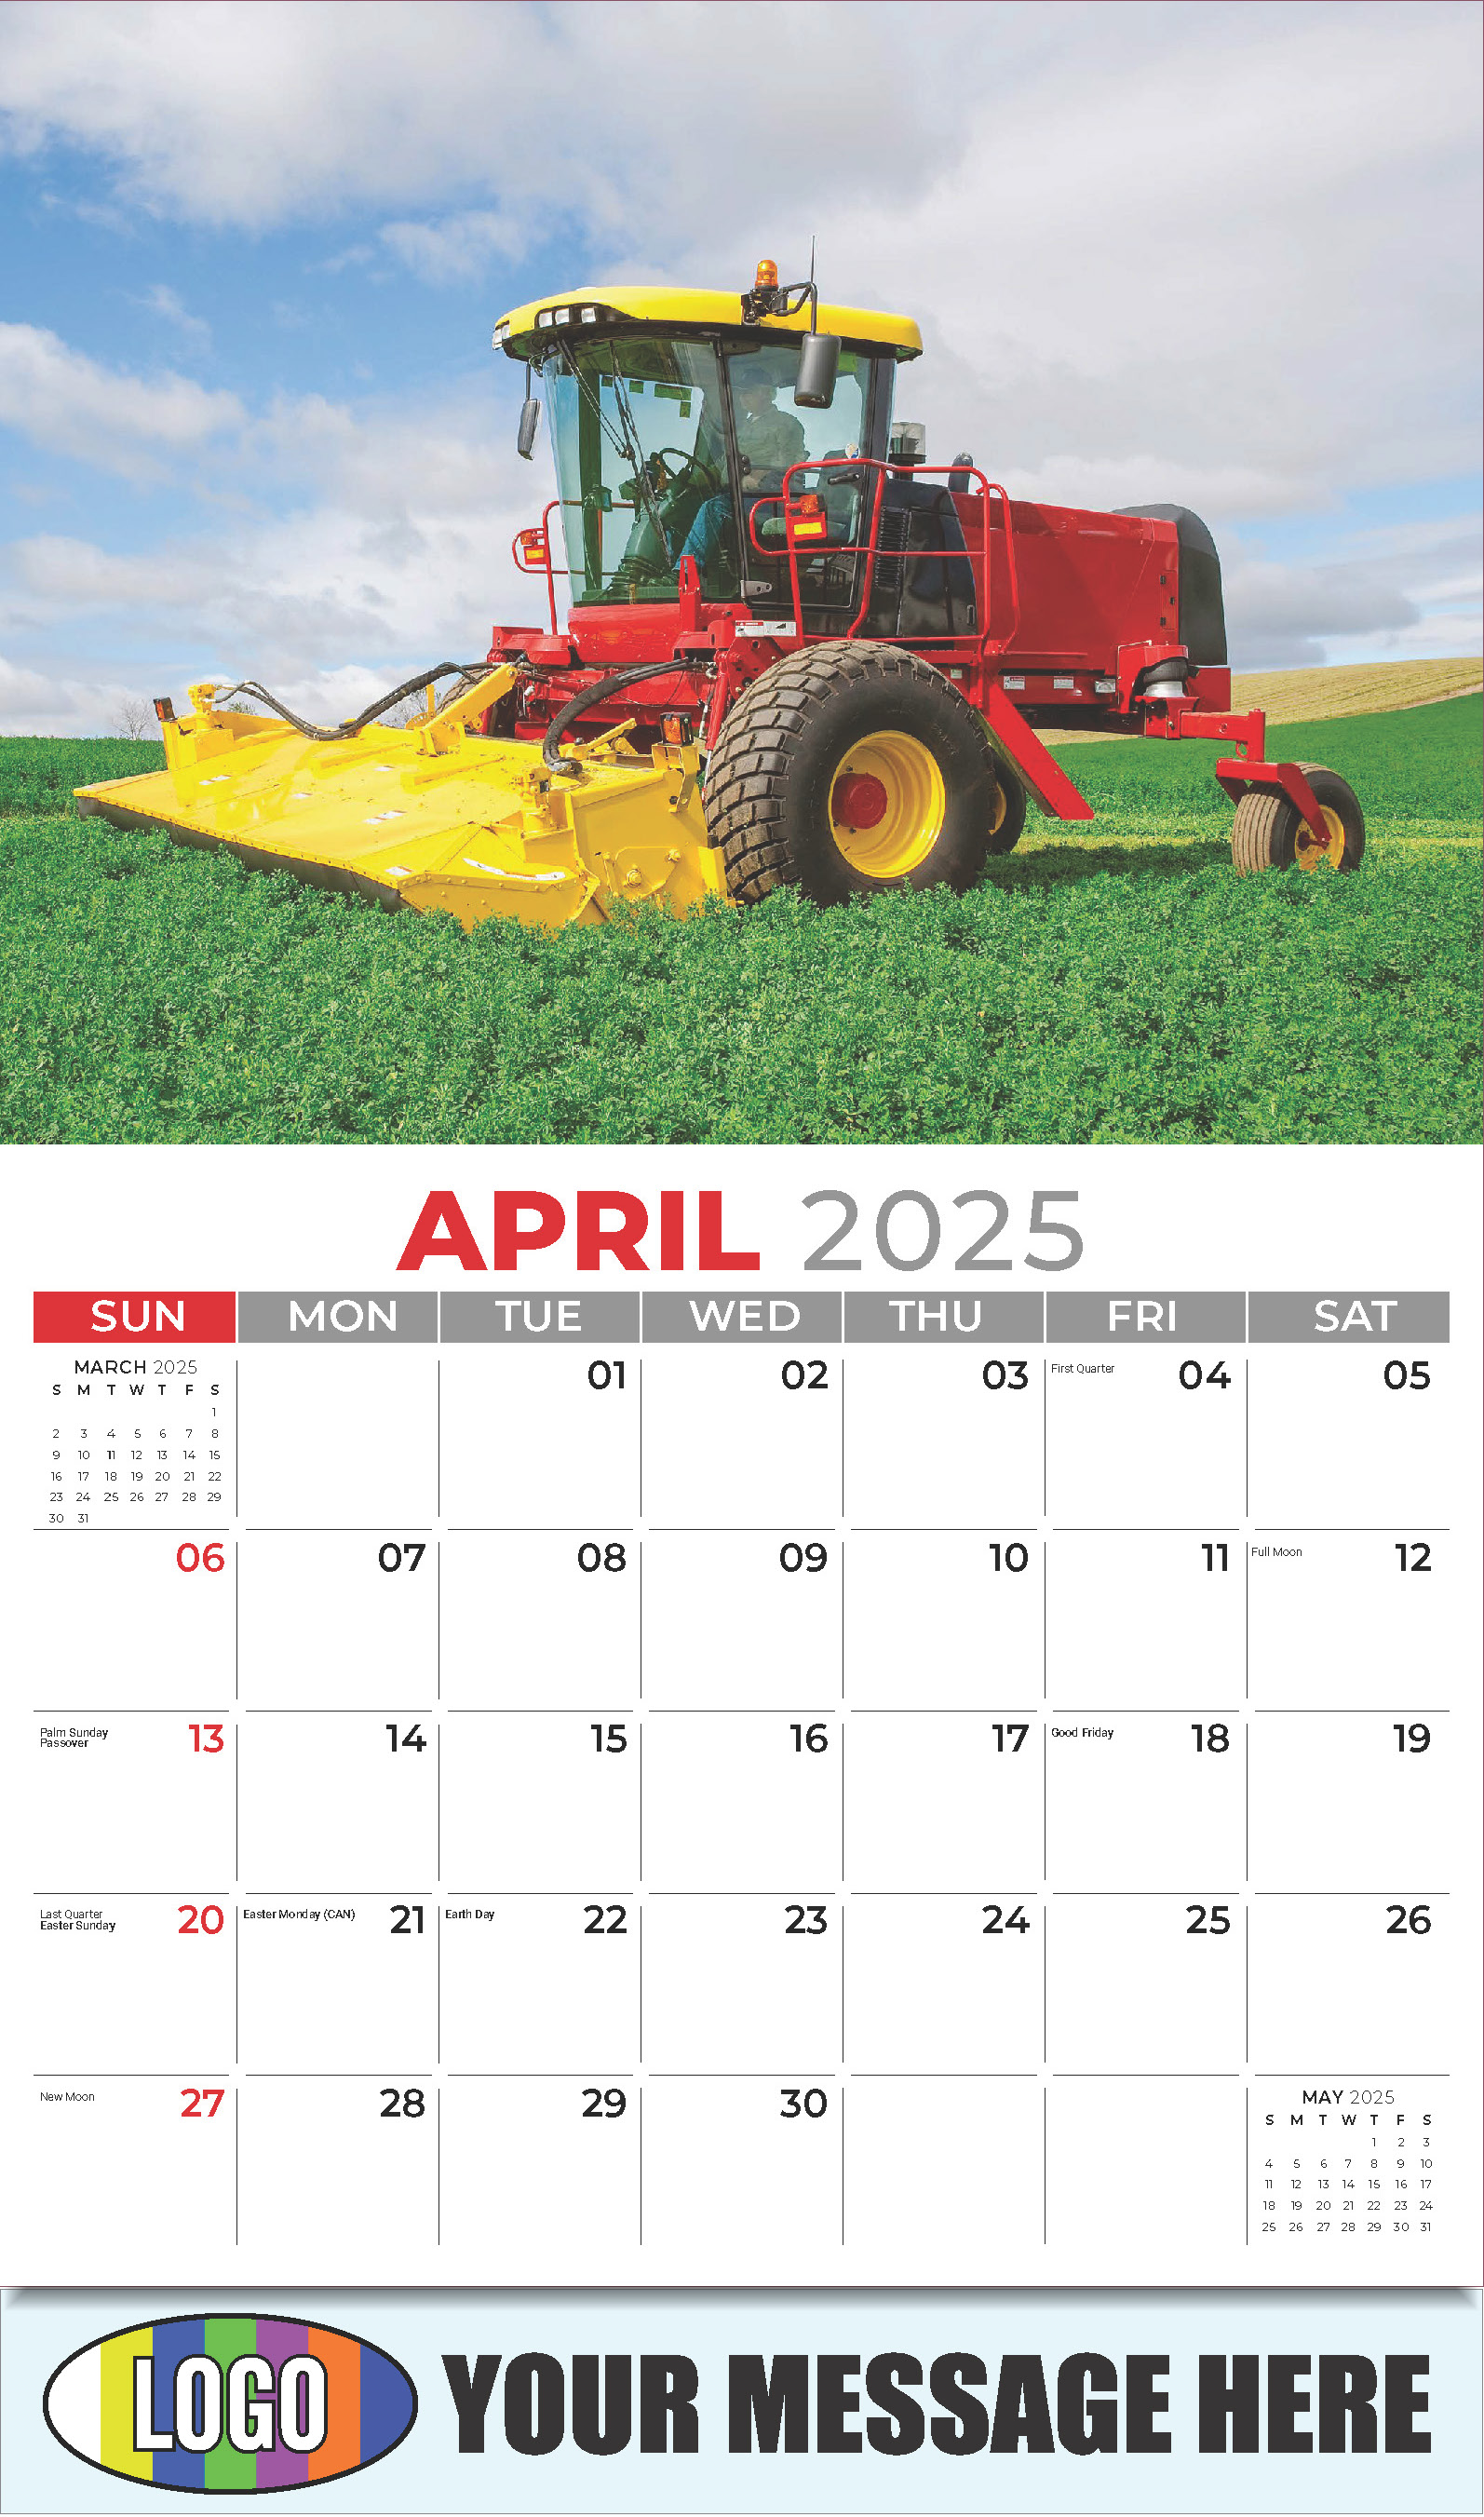 Country Spirit 2025 Business Advertising Calendar - April